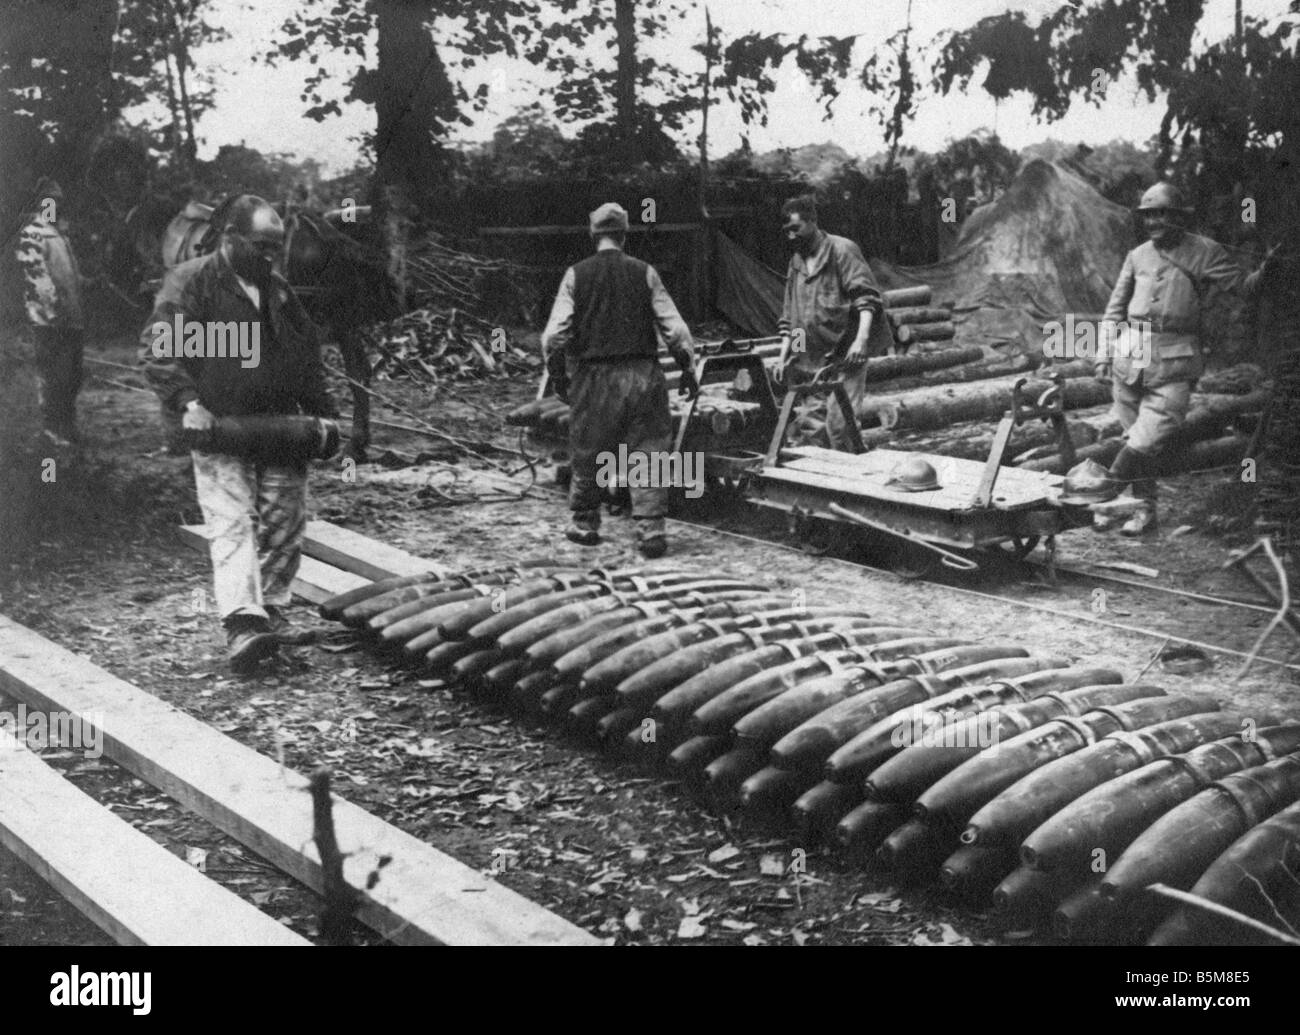 2 G55 F1 1916 63 WW1 French ammunition depot Photo History World War 1 France The Somme French ammunition depot Photo anon undat Stock Photo